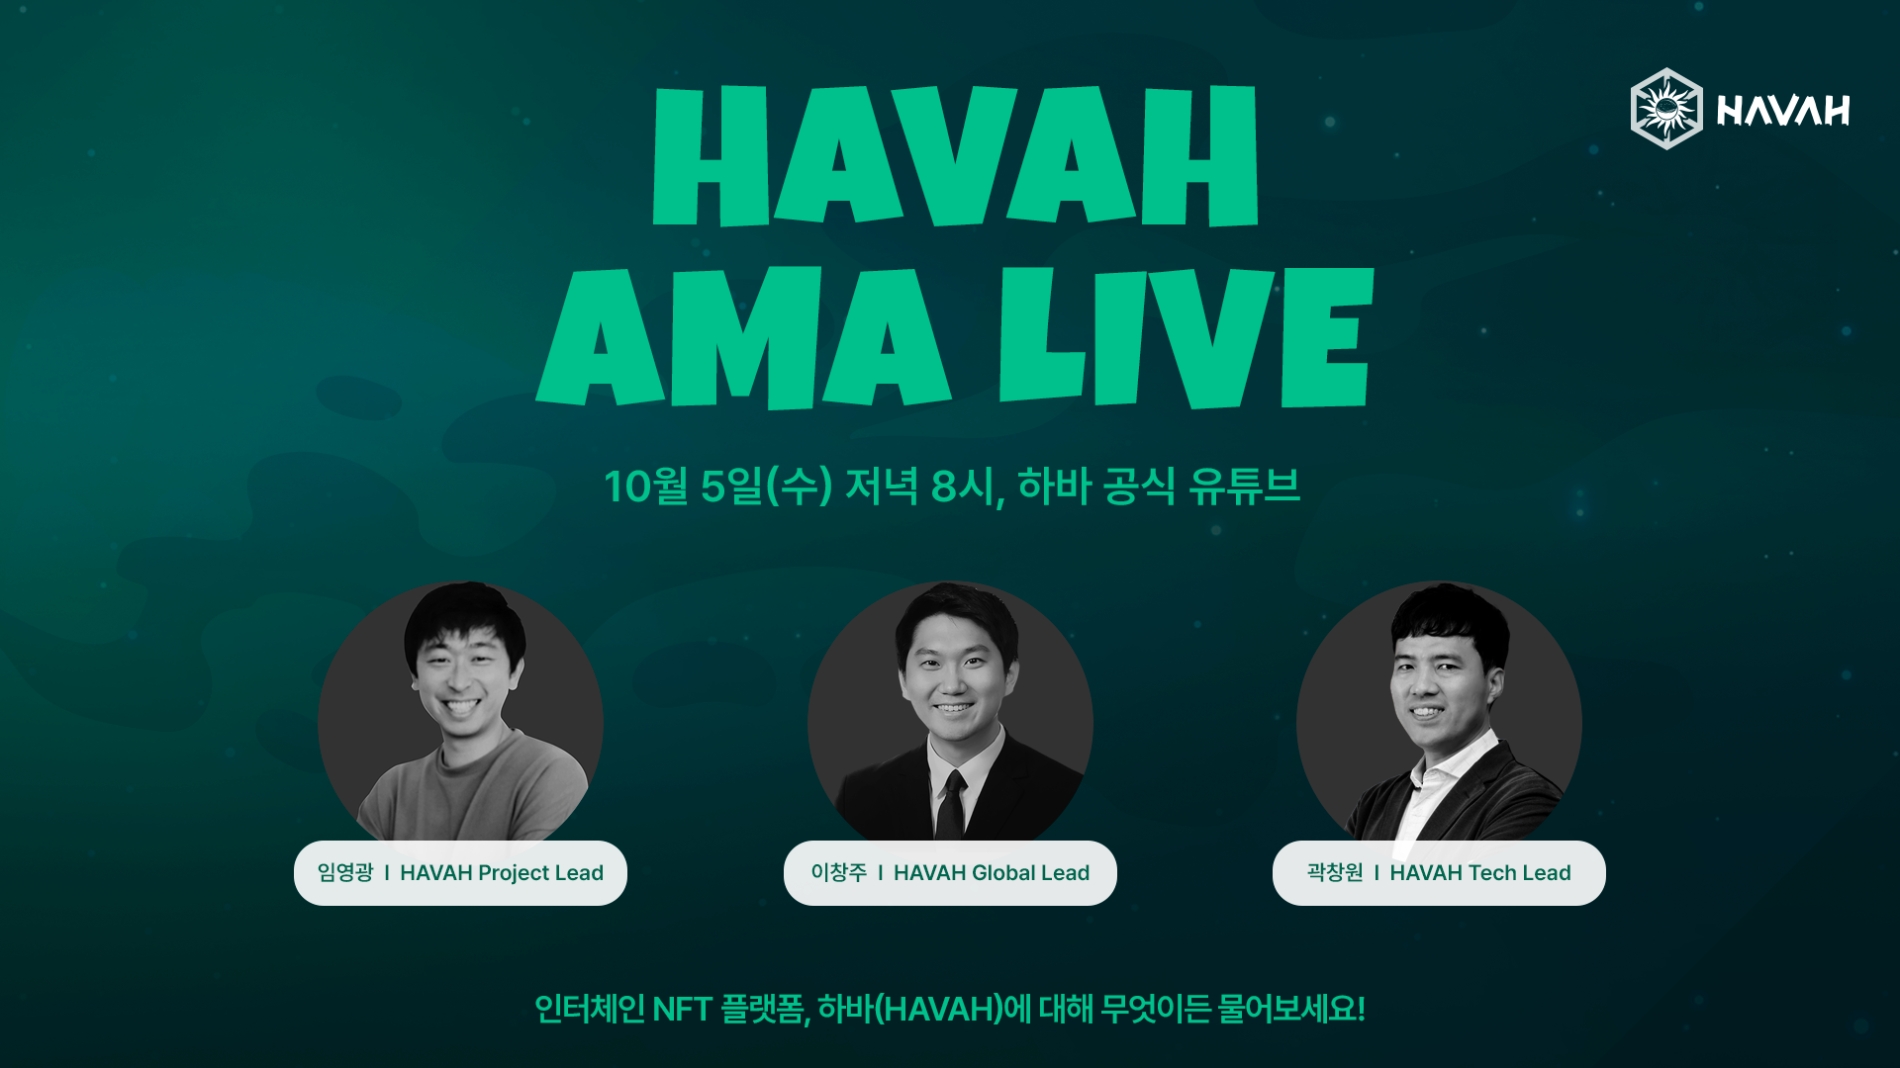 [IT이슈] 인터체인 NFT 플랫폼 하바(HAVAH), 글로벌 AMA LIVE 개최 外